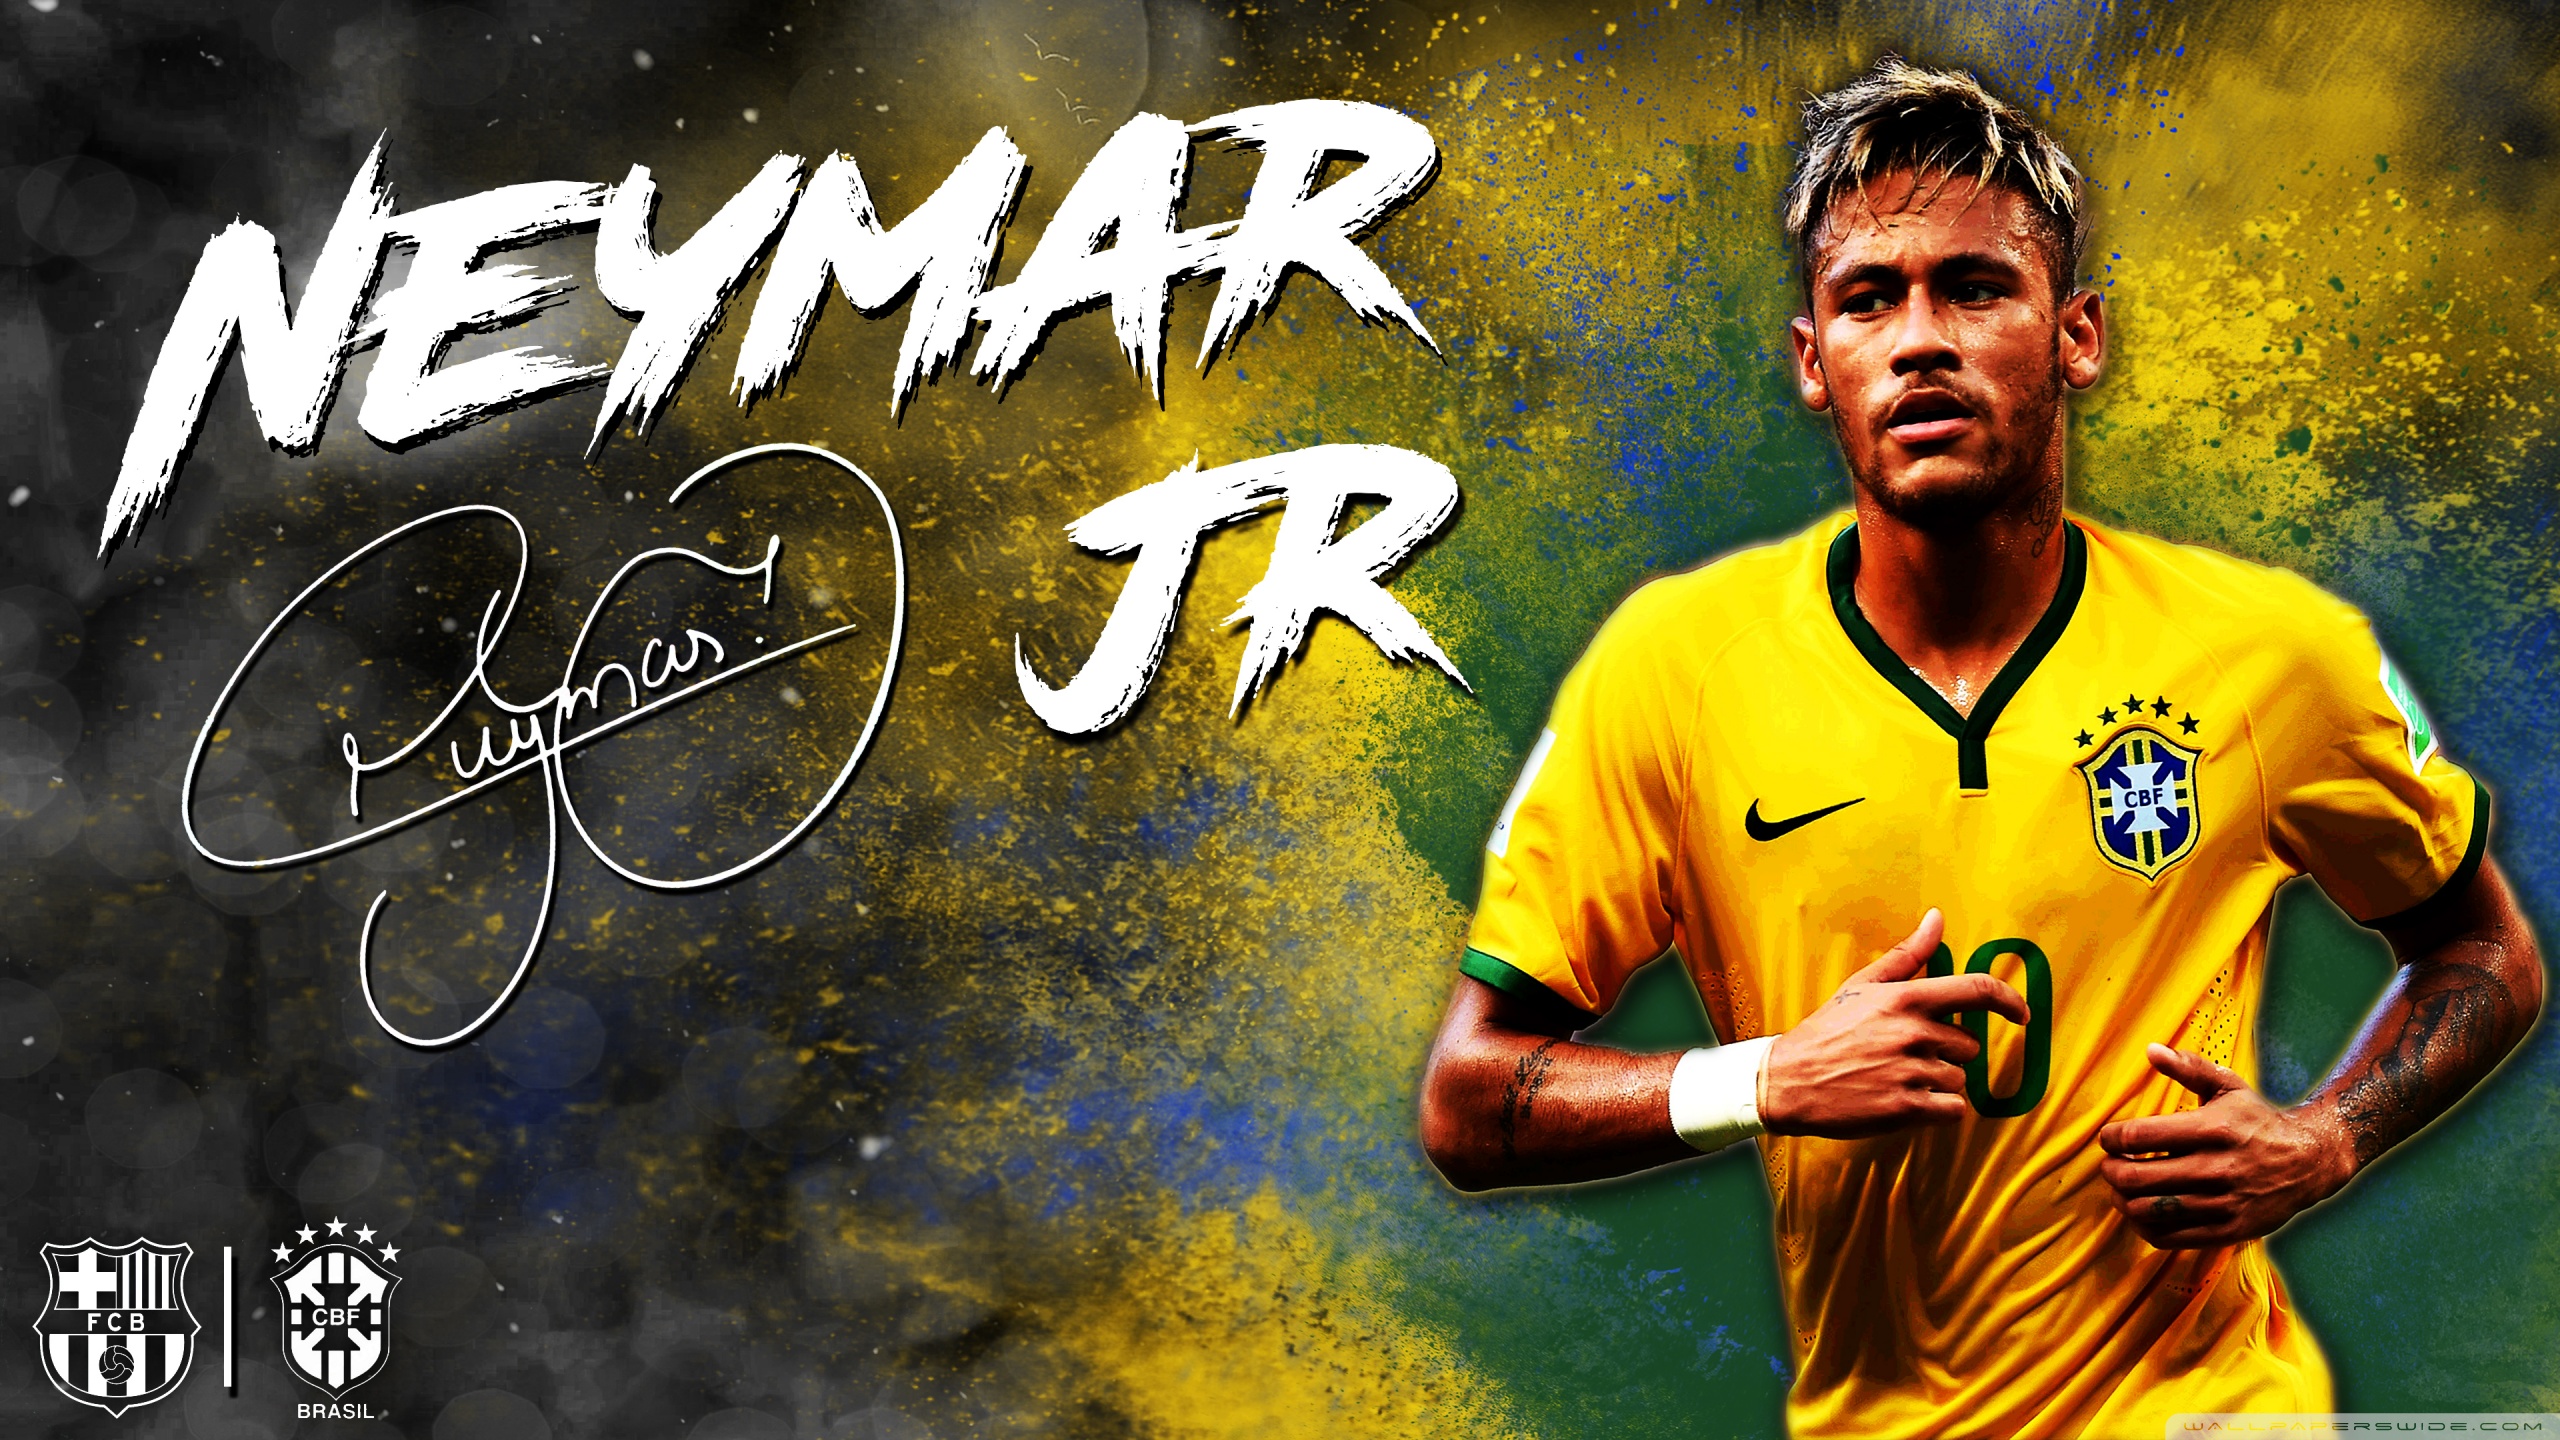 Neymar Wallpaper  547 Neymar Wallpaper 4K for iPhone iPad Phone Pc  2023  485 Mood off DP Images Photos Pics Download 2023